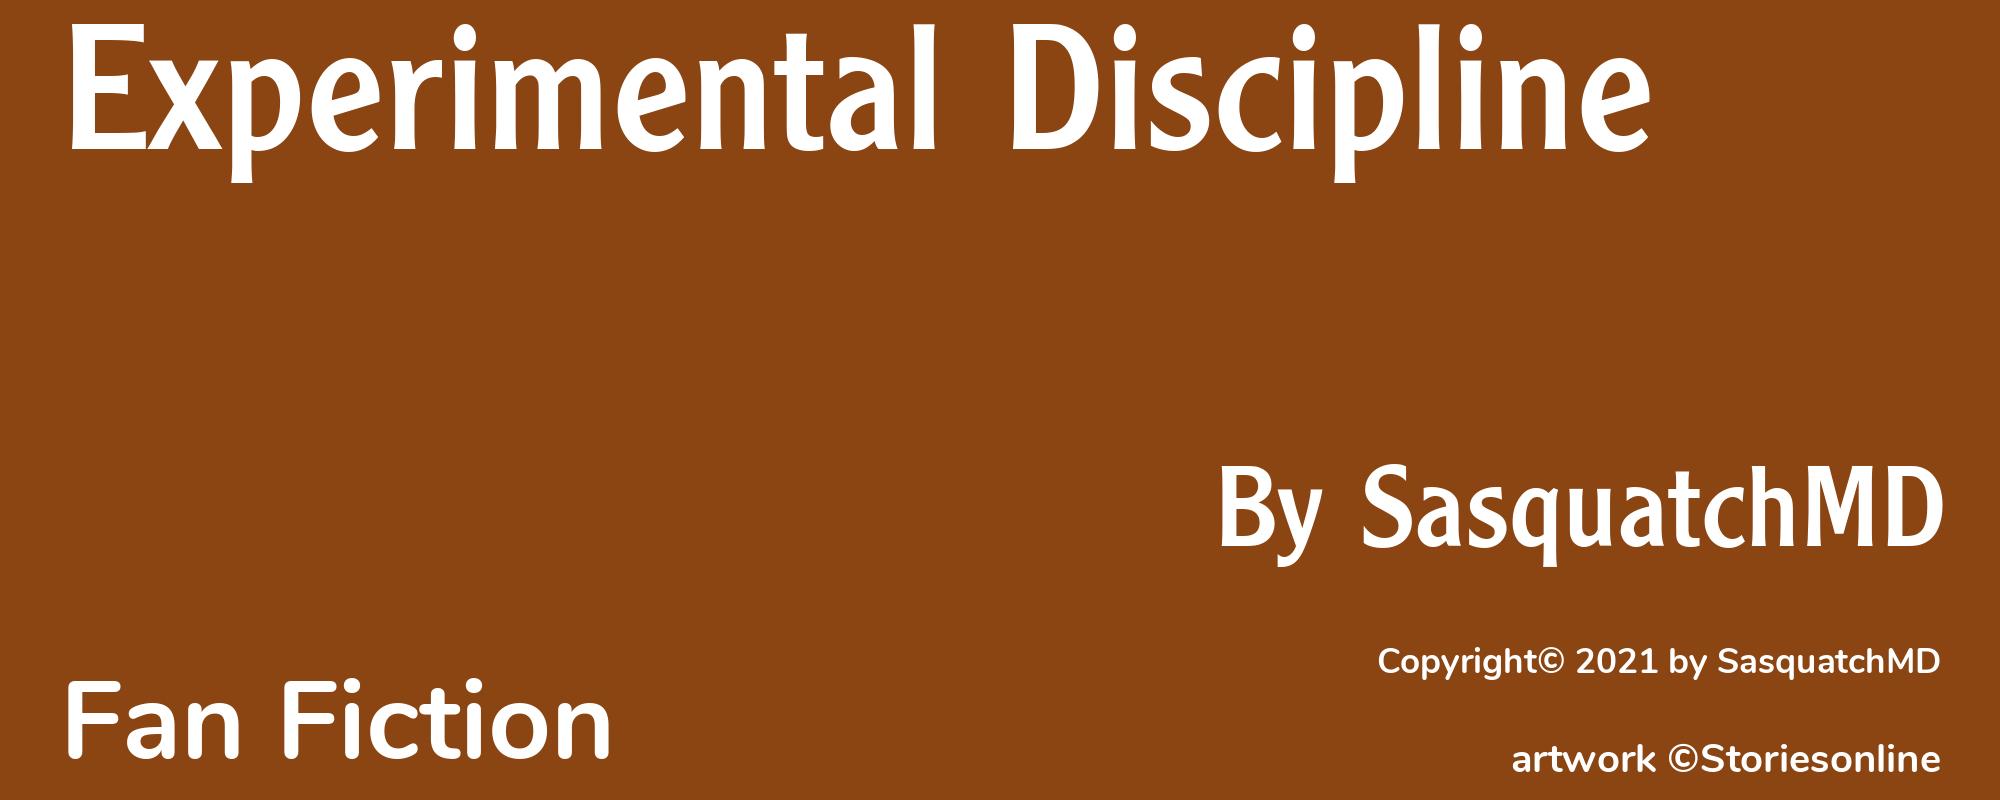 Experimental Discipline - Cover